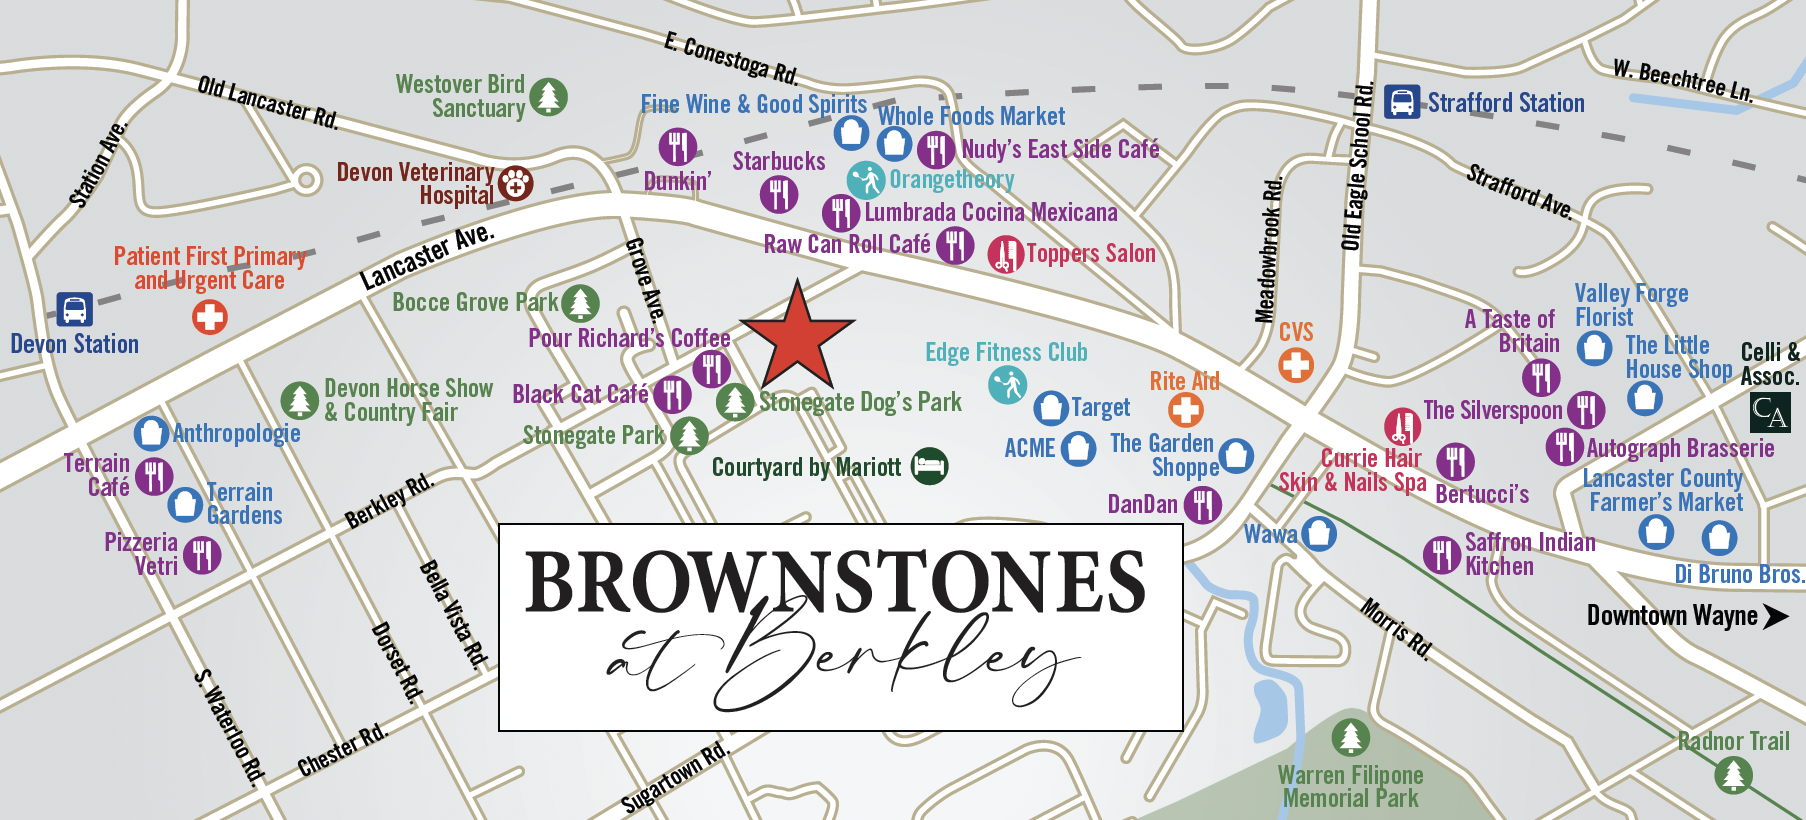 Brownstones at Berkley Area Map Photo